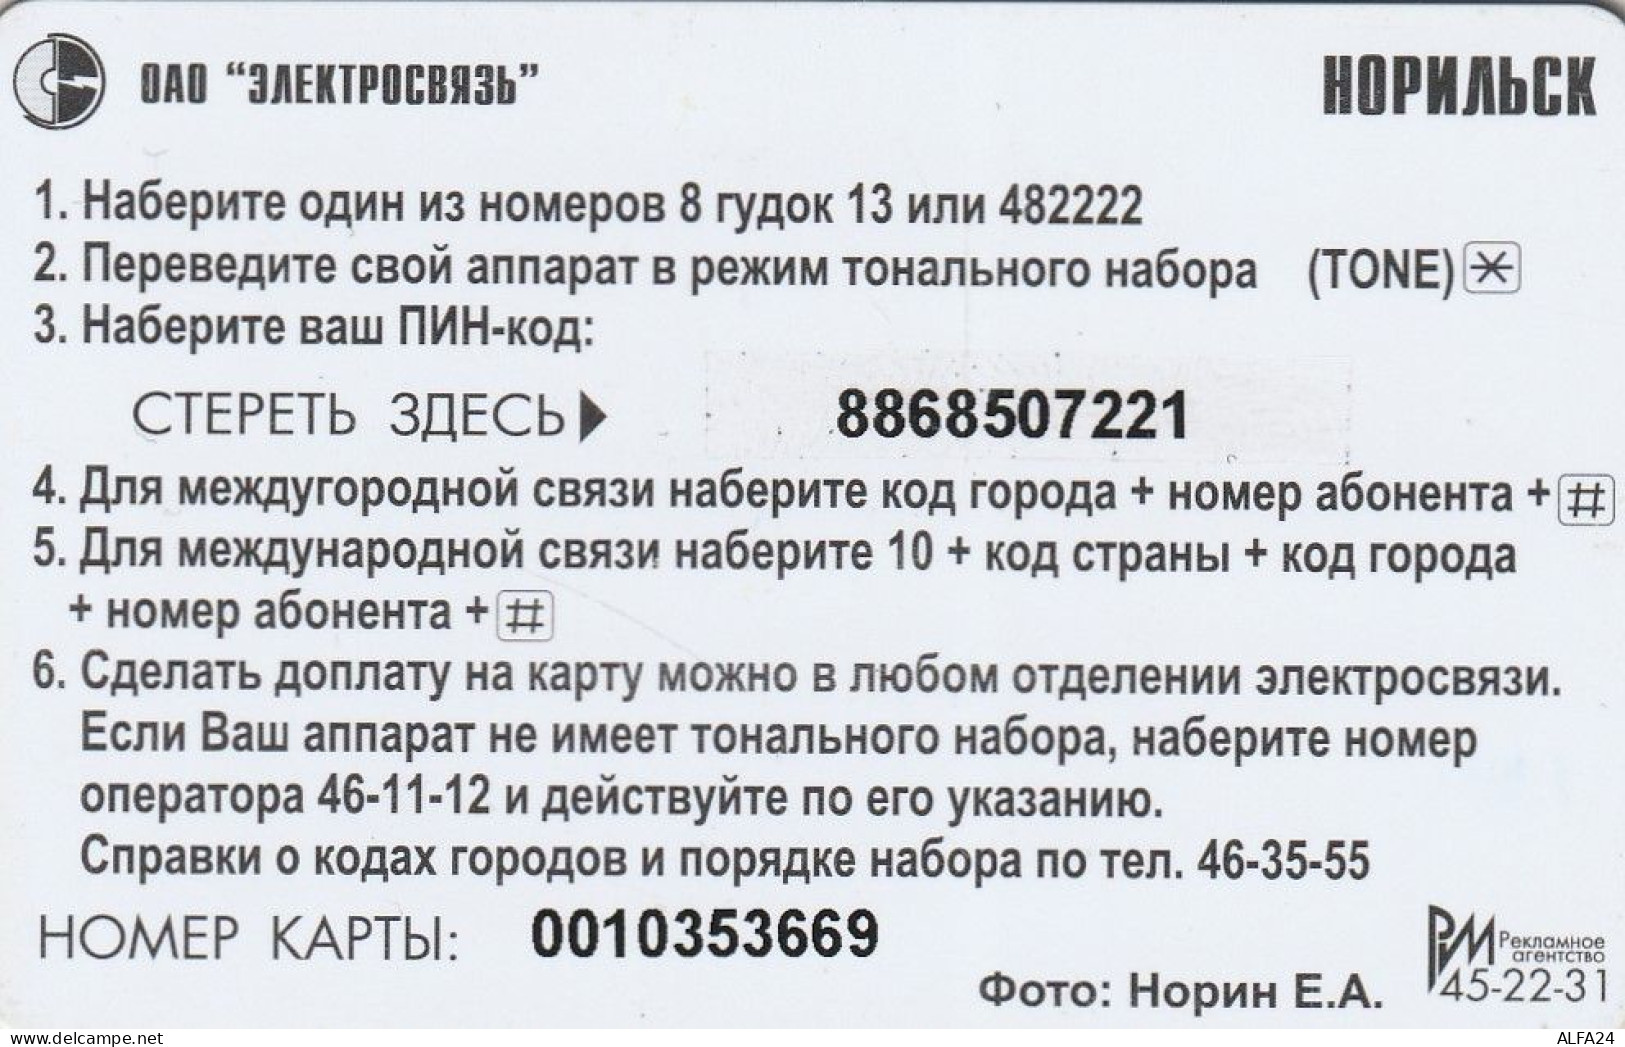 PREPAID PHONE CARD RUSSIA Sibirtelecom - Norilsk, Krasnoyarsk Region CTK (CZ369 - Russie